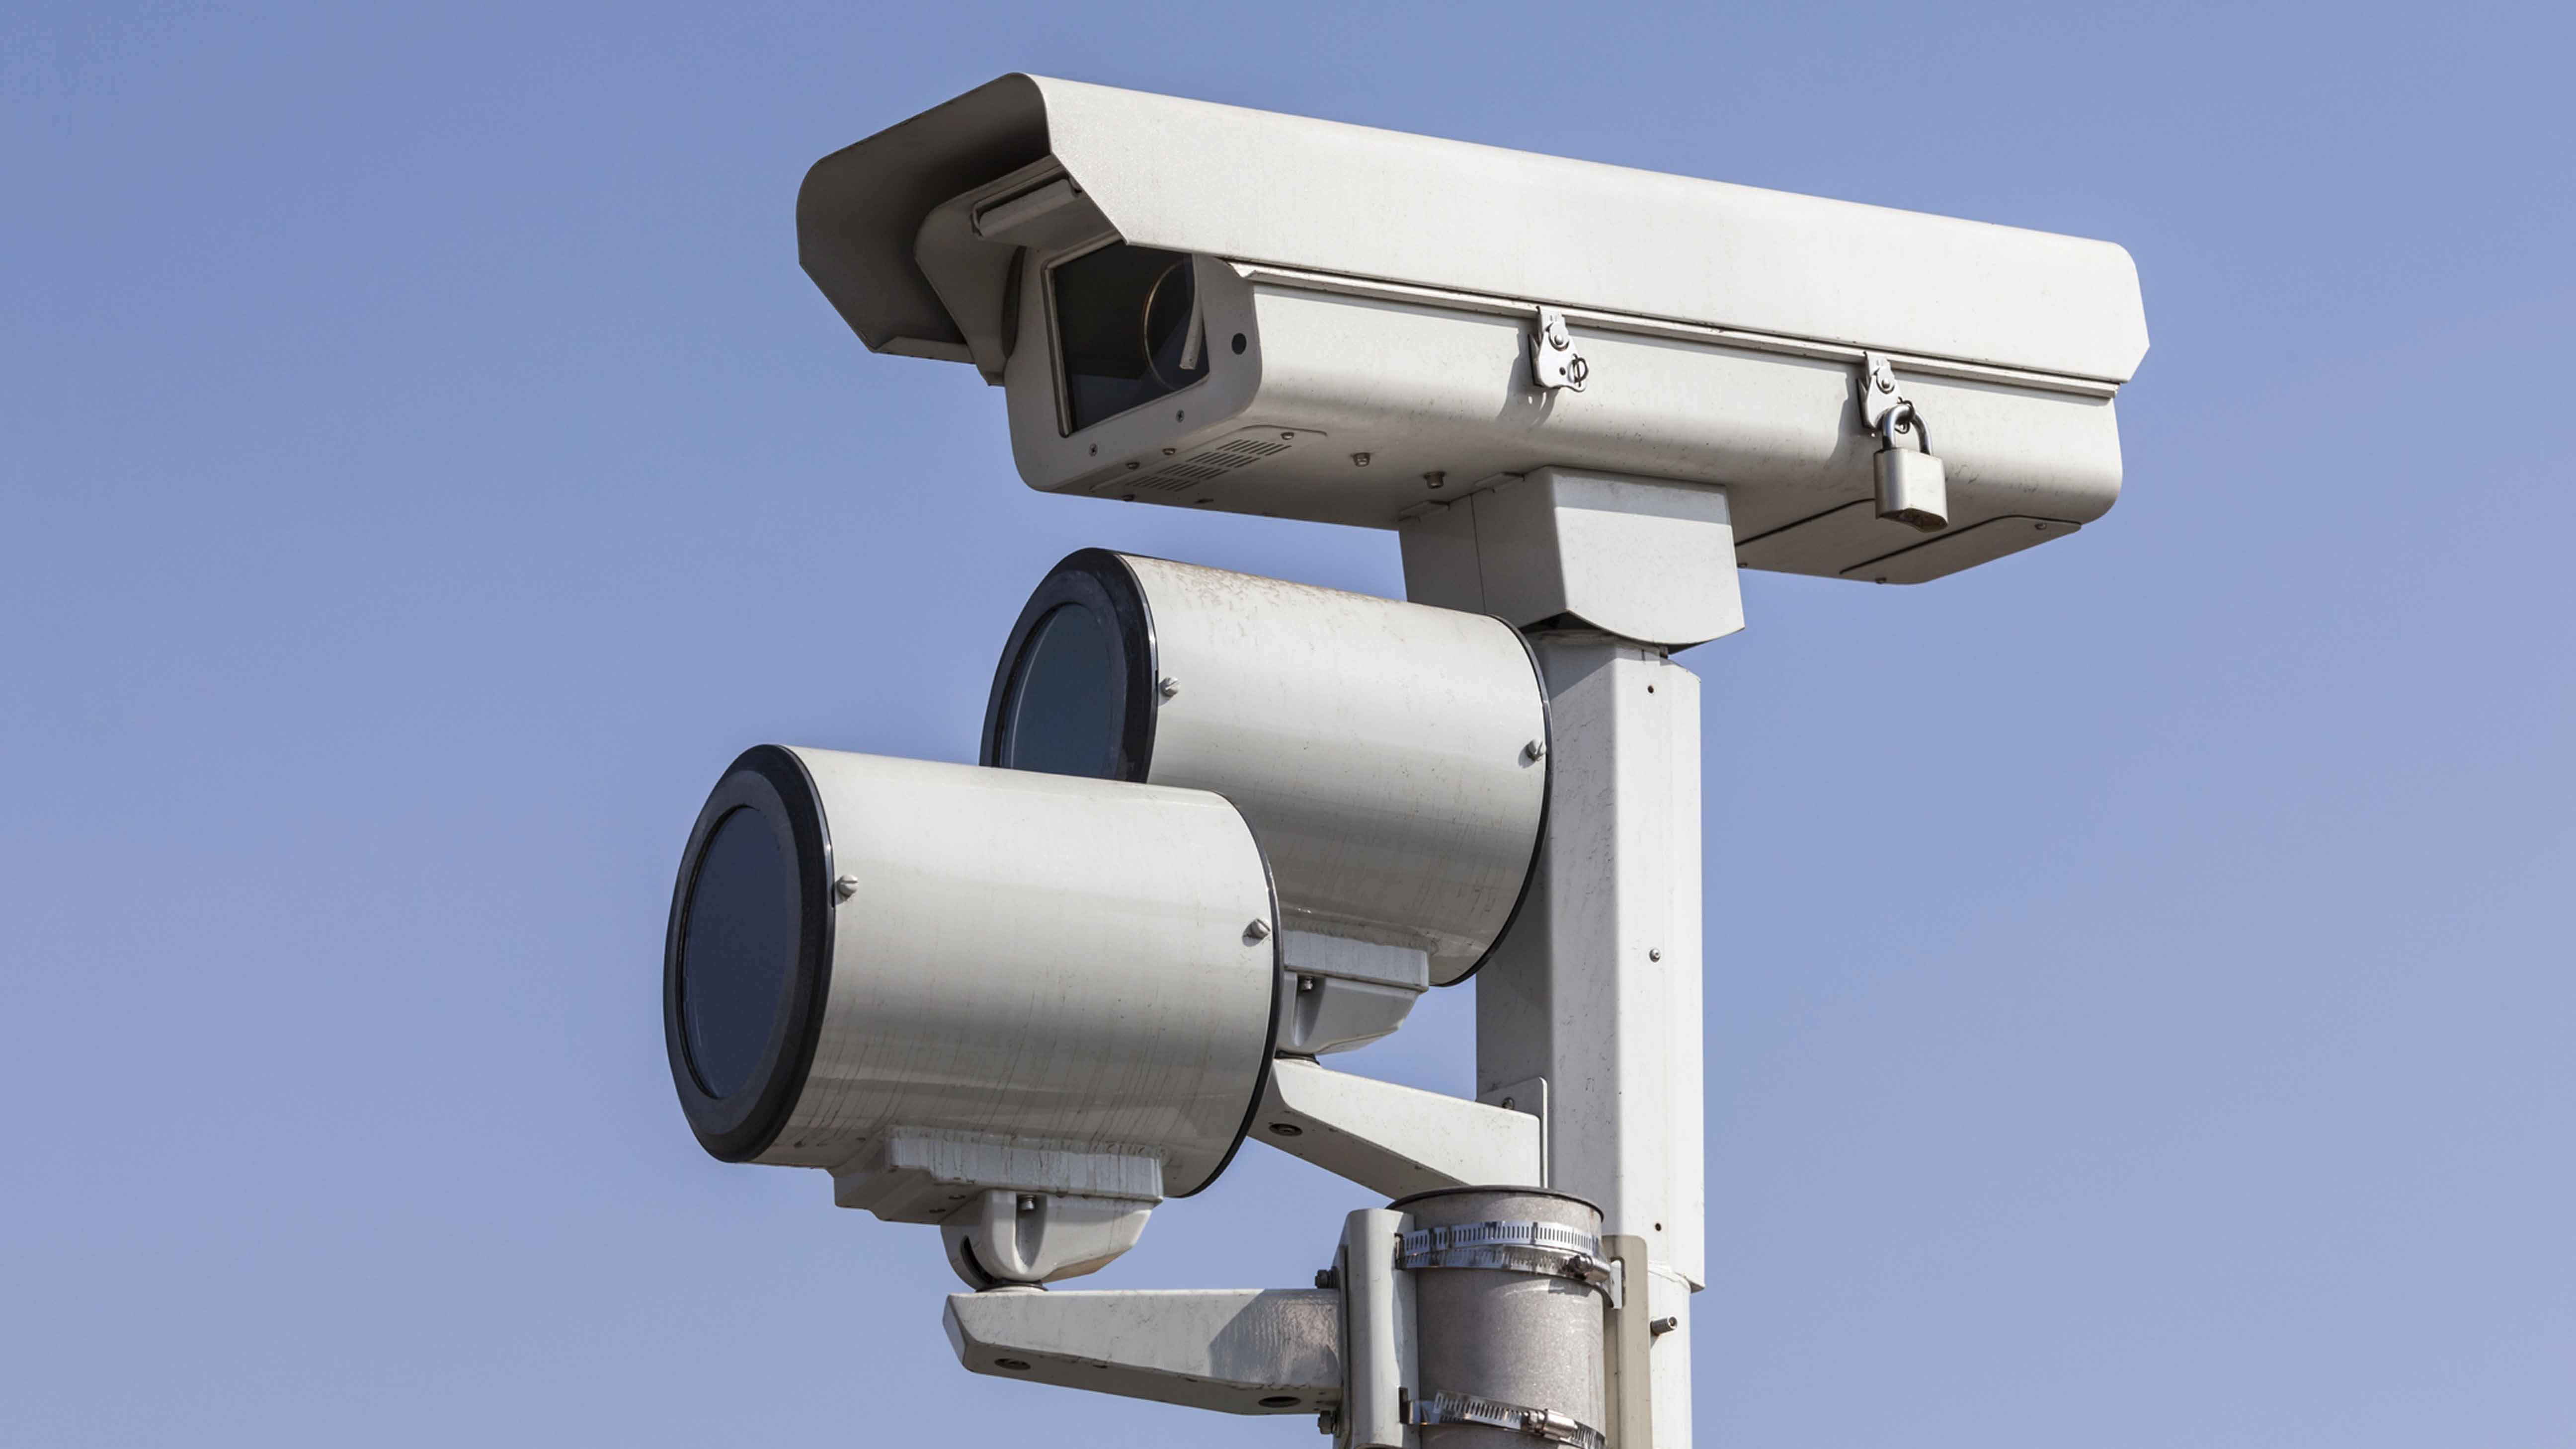 Red light cameras can catch you speeding starting Thursday